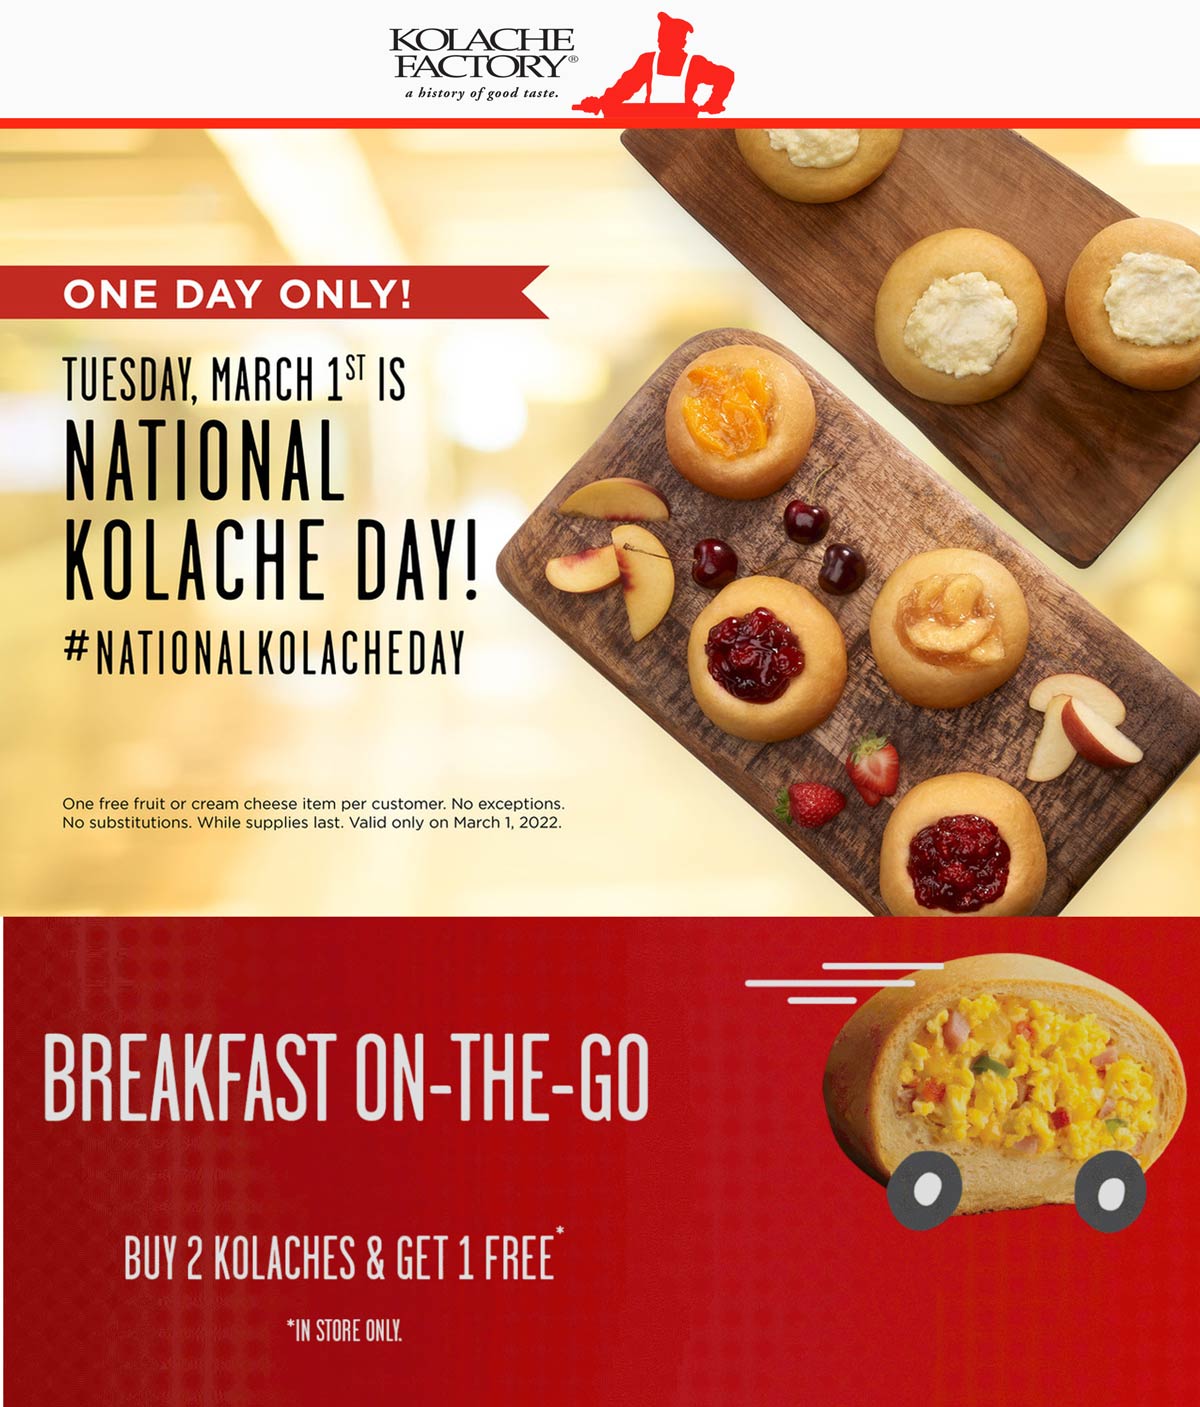 Kolache Factory restaurants Coupon  Free kolache today at Kolache Factory restaurants #kolachefactory 